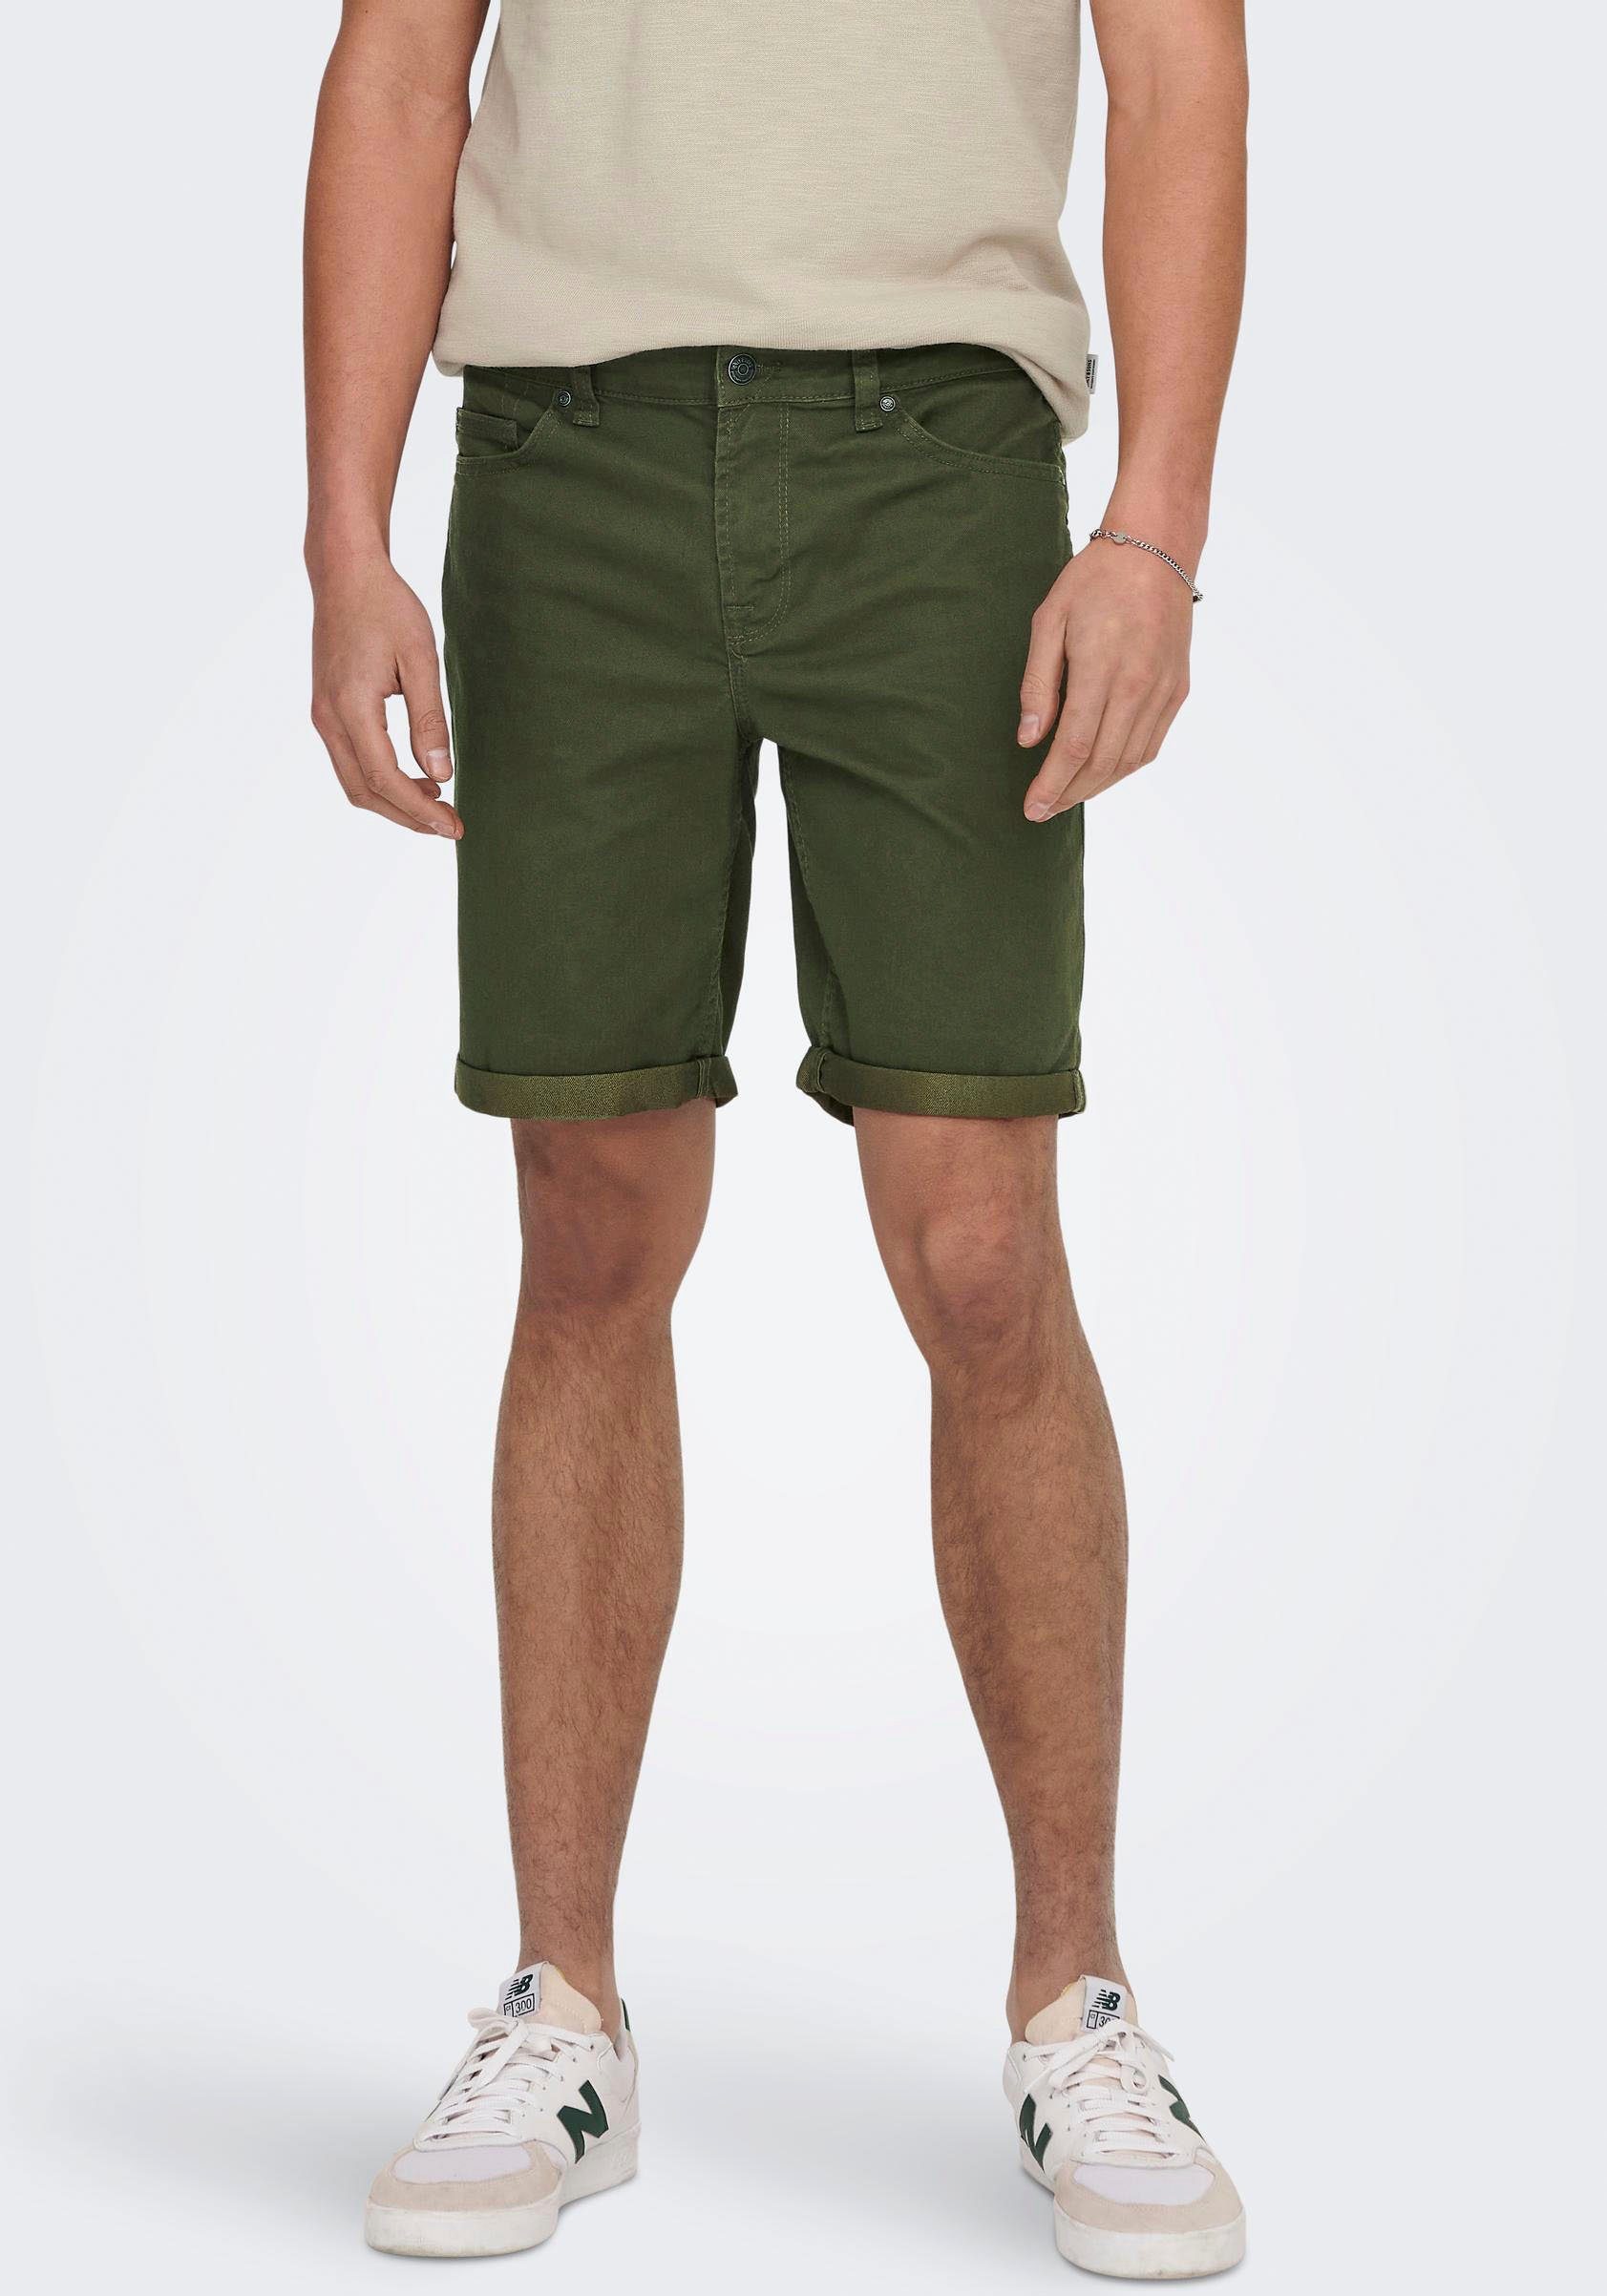 Sommer Shorts online kaufen| OTTO